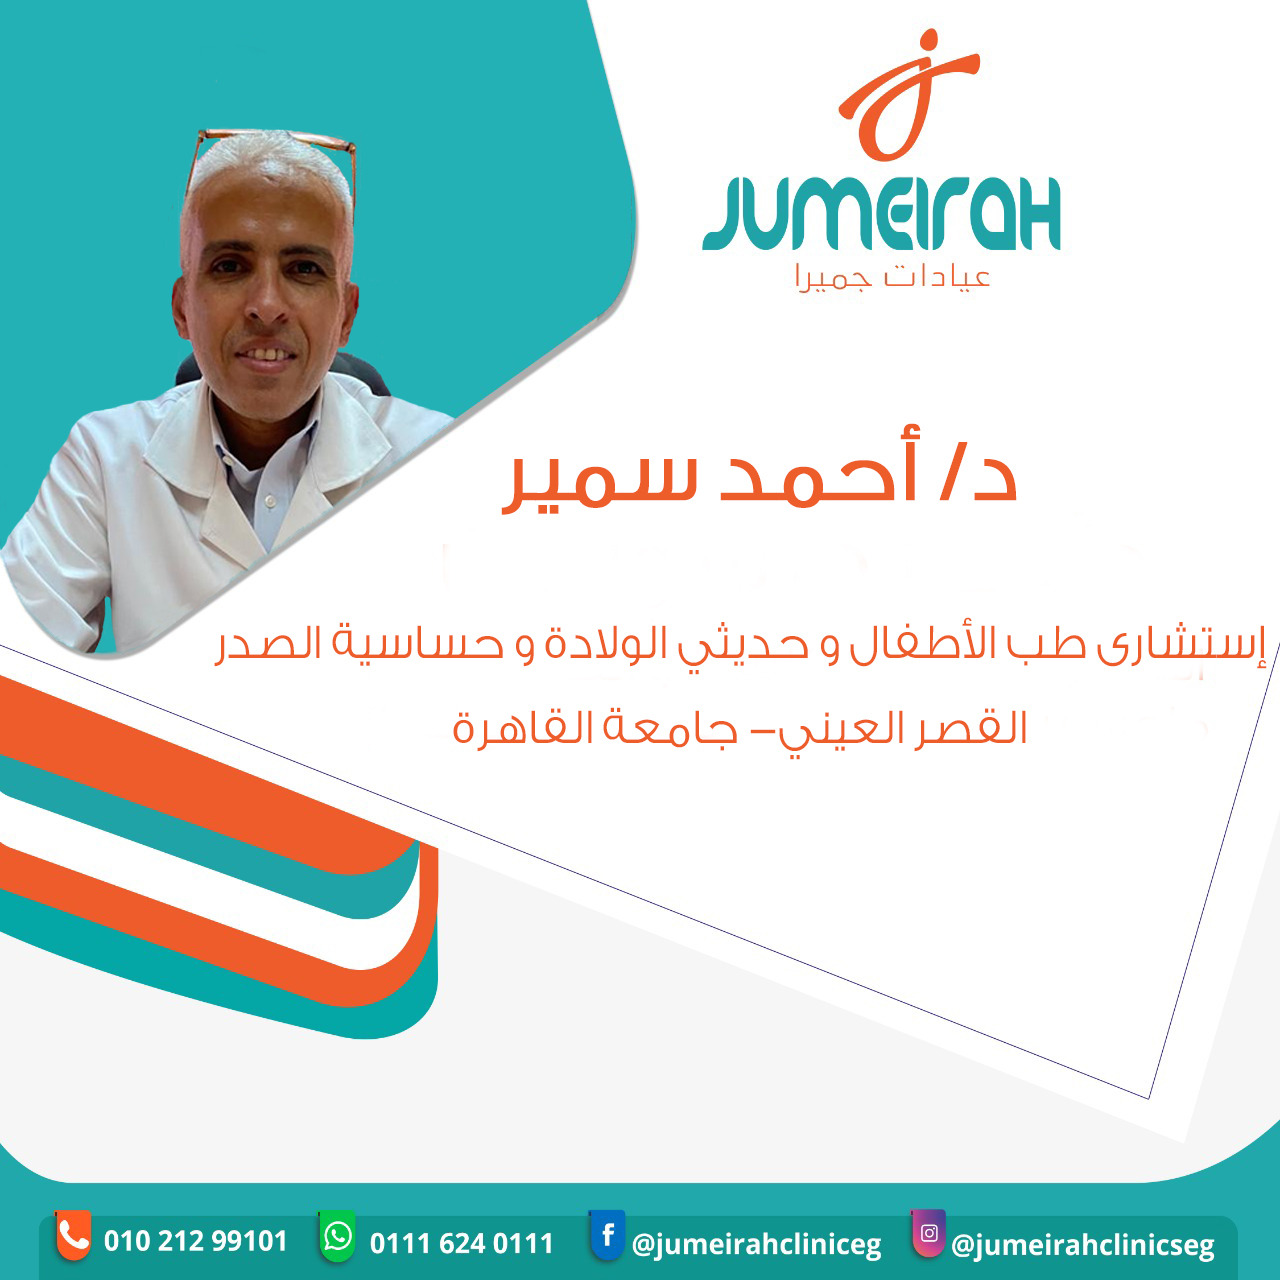 Dr. Ahmed Sameer